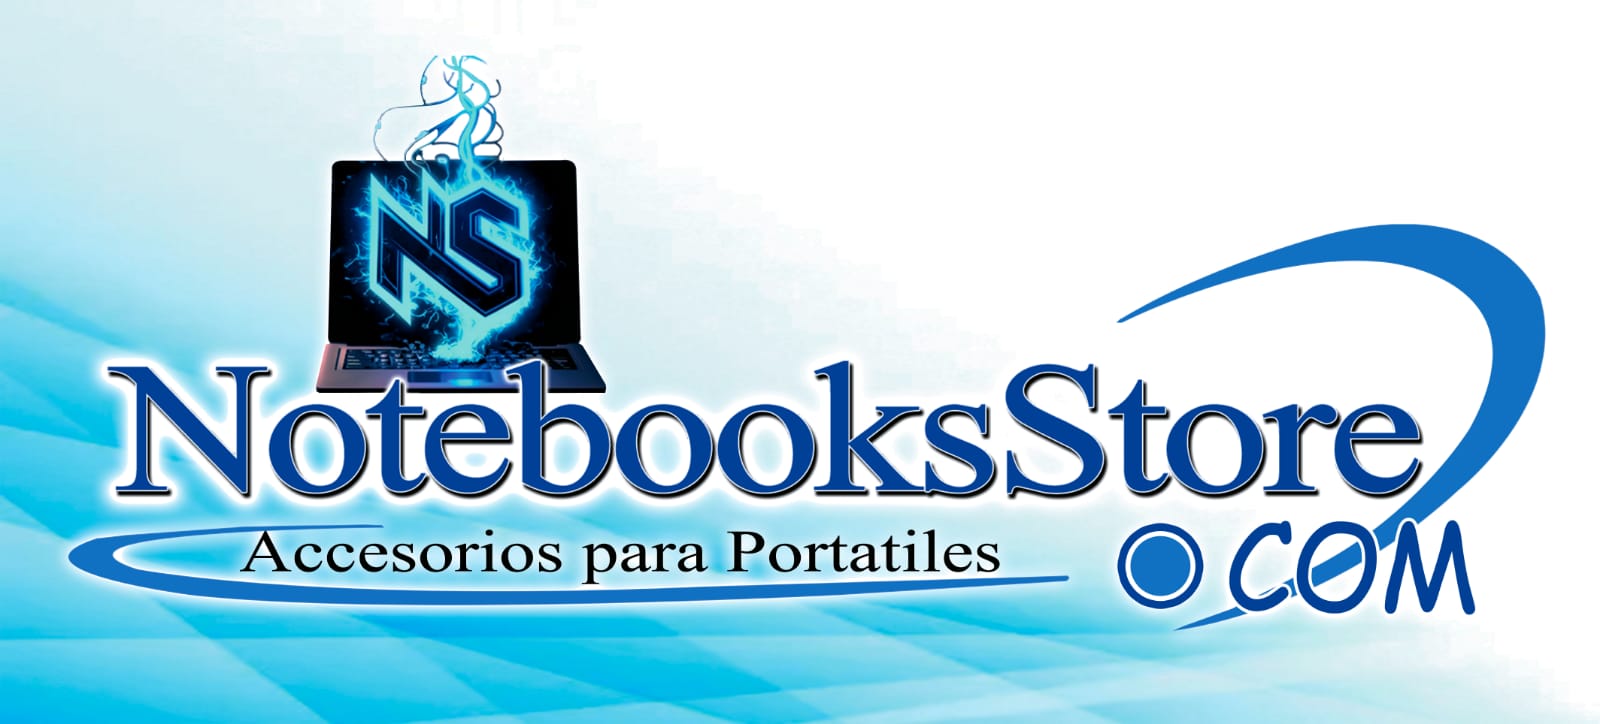 Notebooks Store